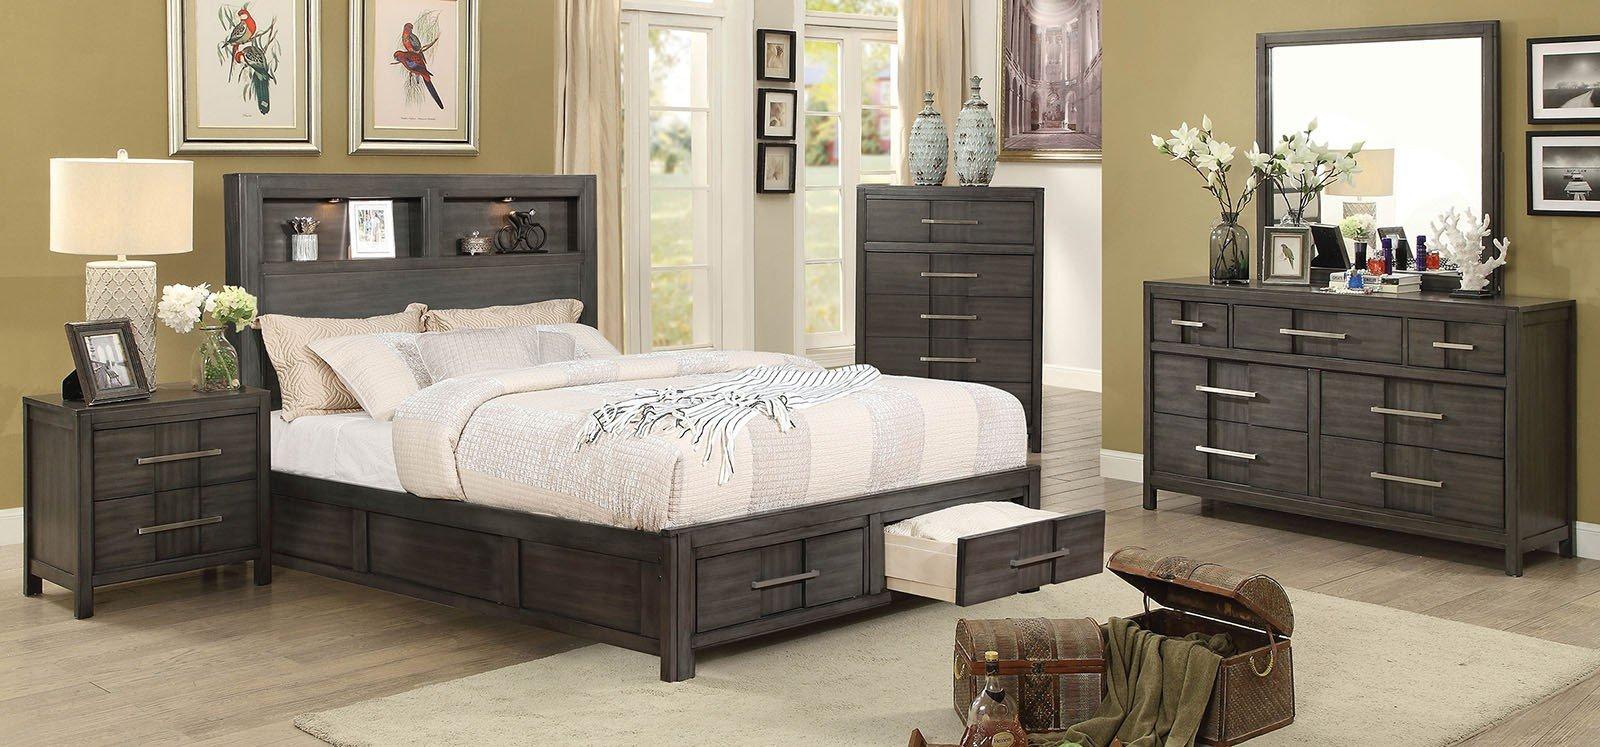 furniture of america karla bedroom set